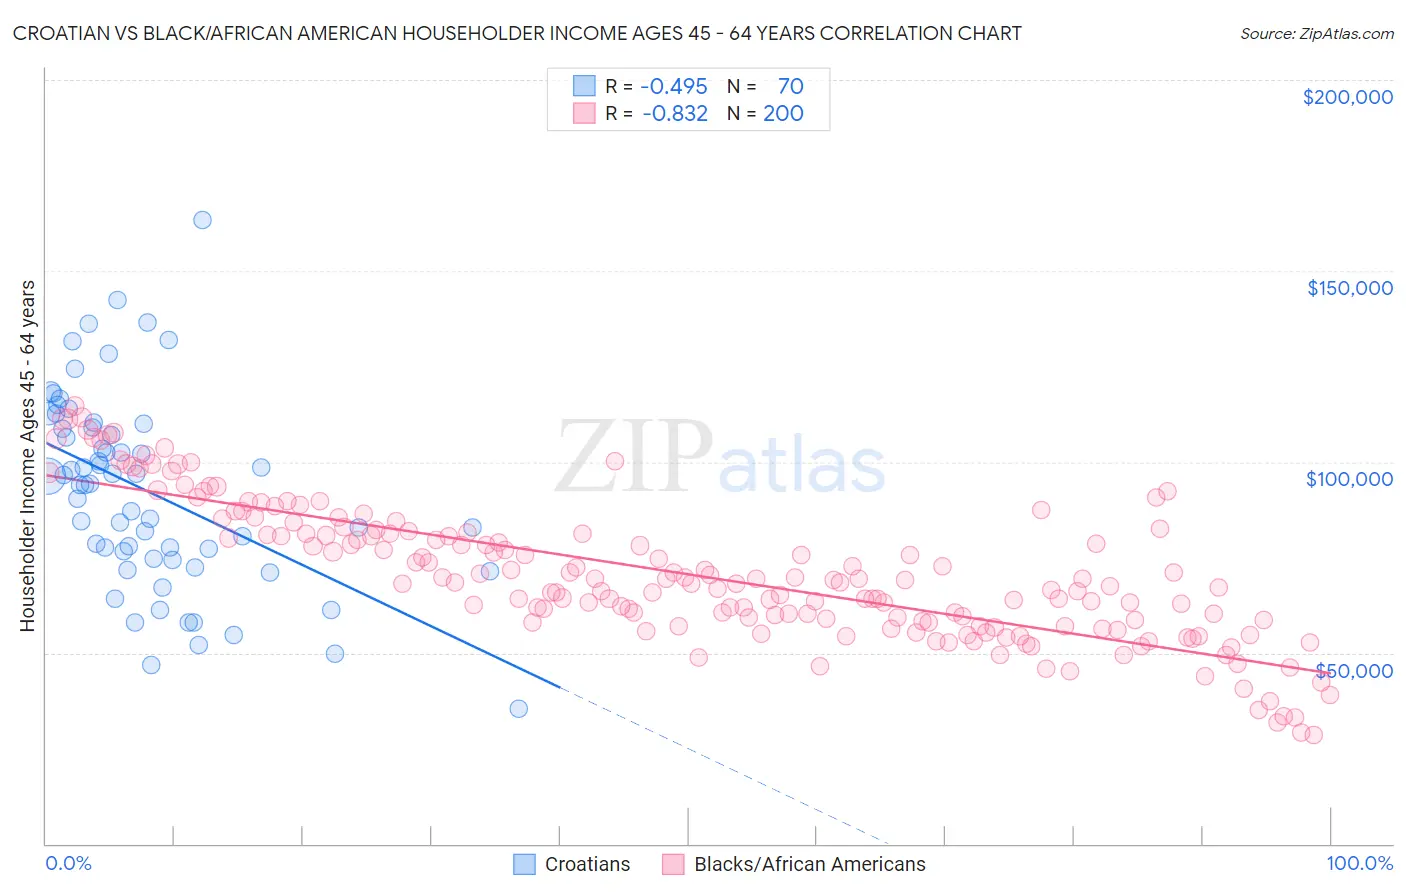 Croatian vs Black/African American Householder Income Ages 45 - 64 years